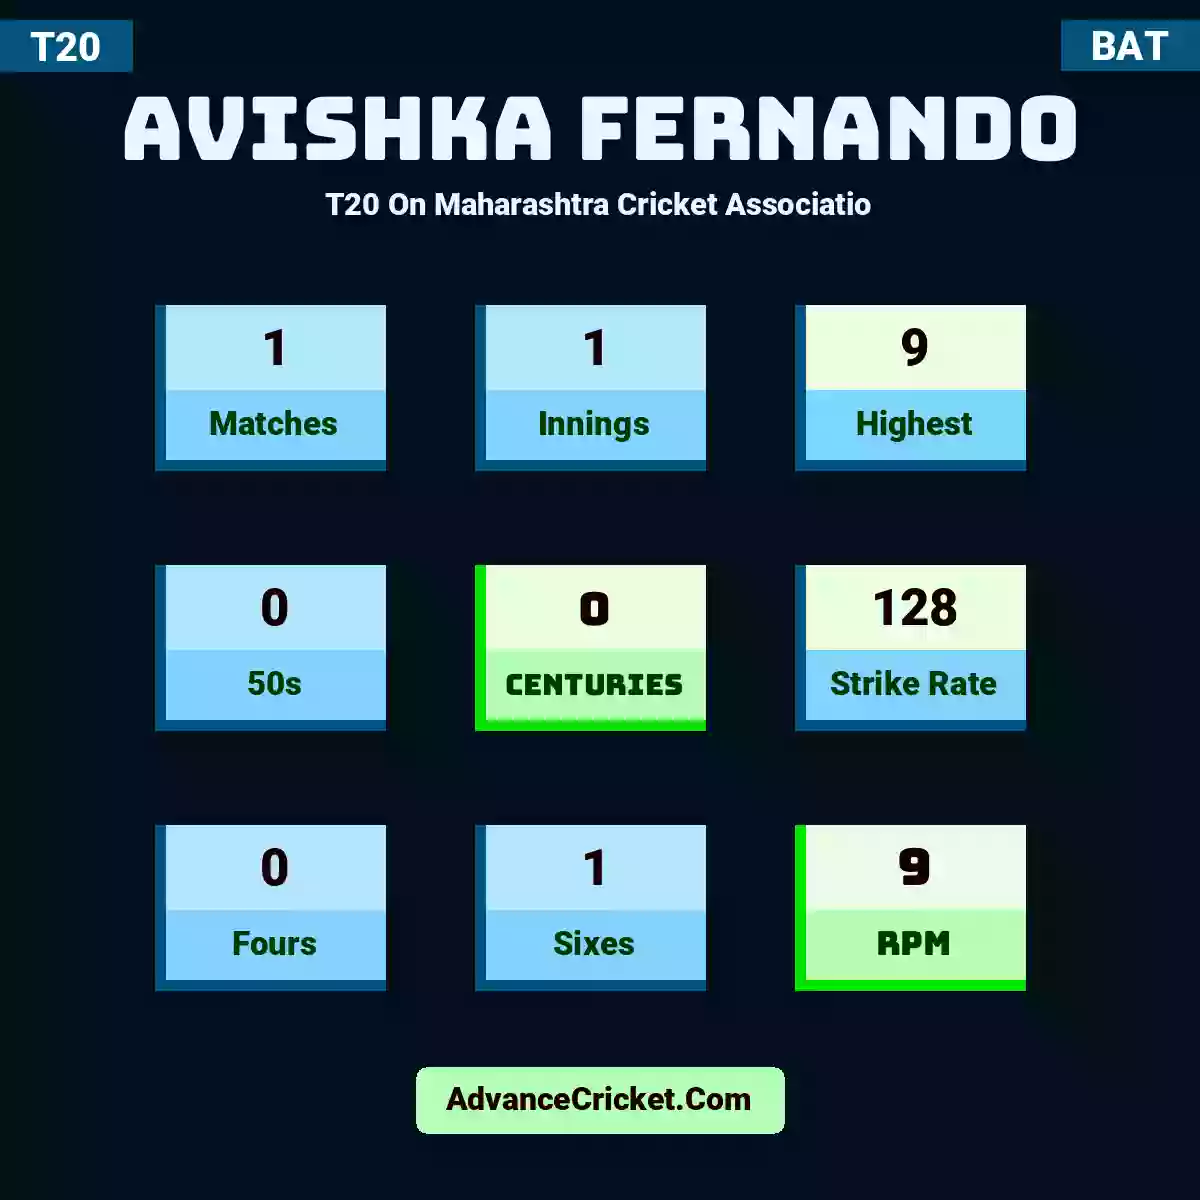 Avishka Fernando T20  On Maharashtra Cricket Associatio, Avishka Fernando played 1 matches, scored 9 runs as highest, 0 half-centuries, and 0 centuries, with a strike rate of 128. A.Fernando hit 0 fours and 1 sixes, with an RPM of 9.